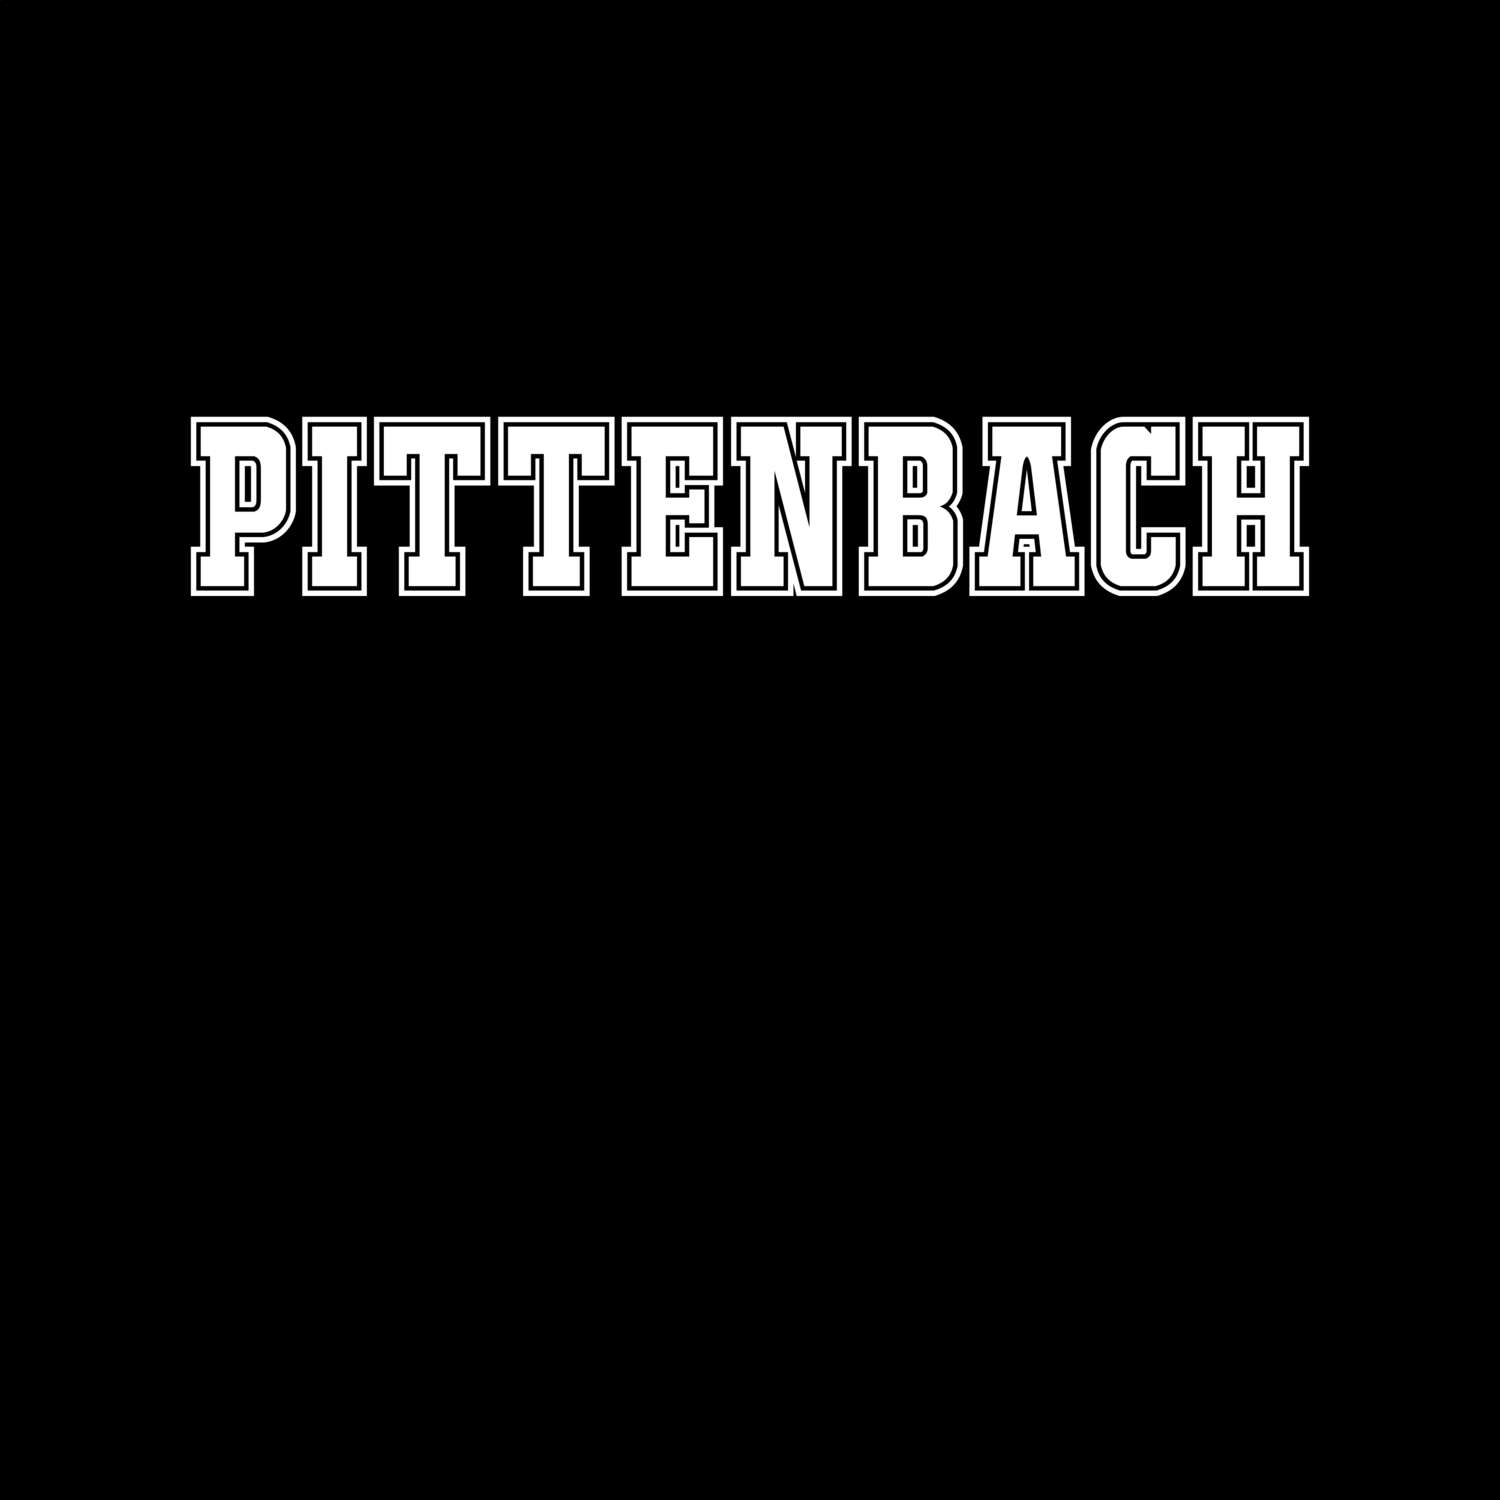 Pittenbach T-Shirt »Classic«